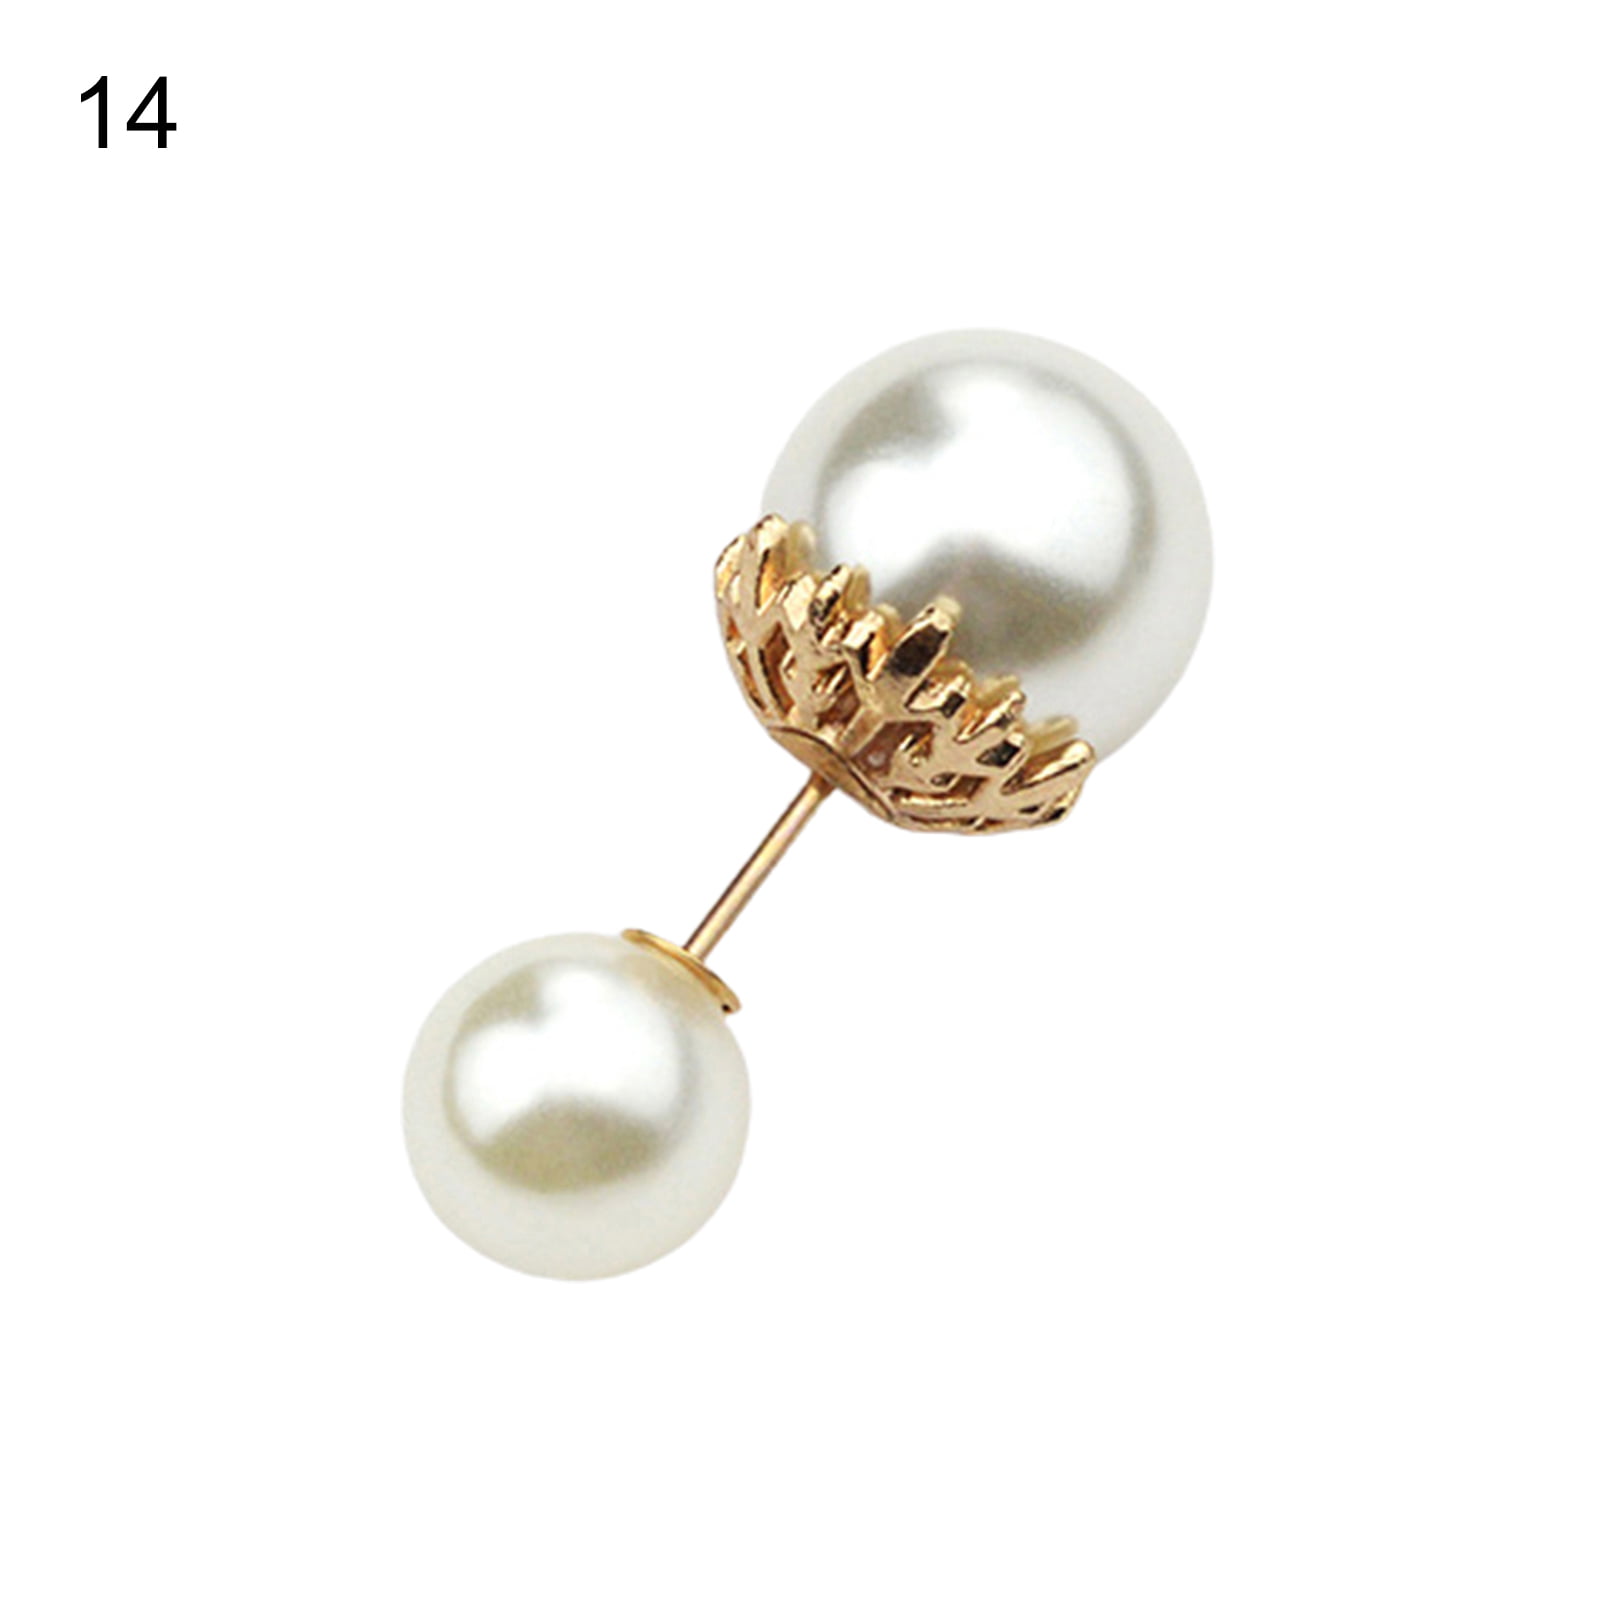 Vintage Art Deco Style Yellow Gold Tone Faux Pearl Clip Pin Grape Design Jewelry K#20